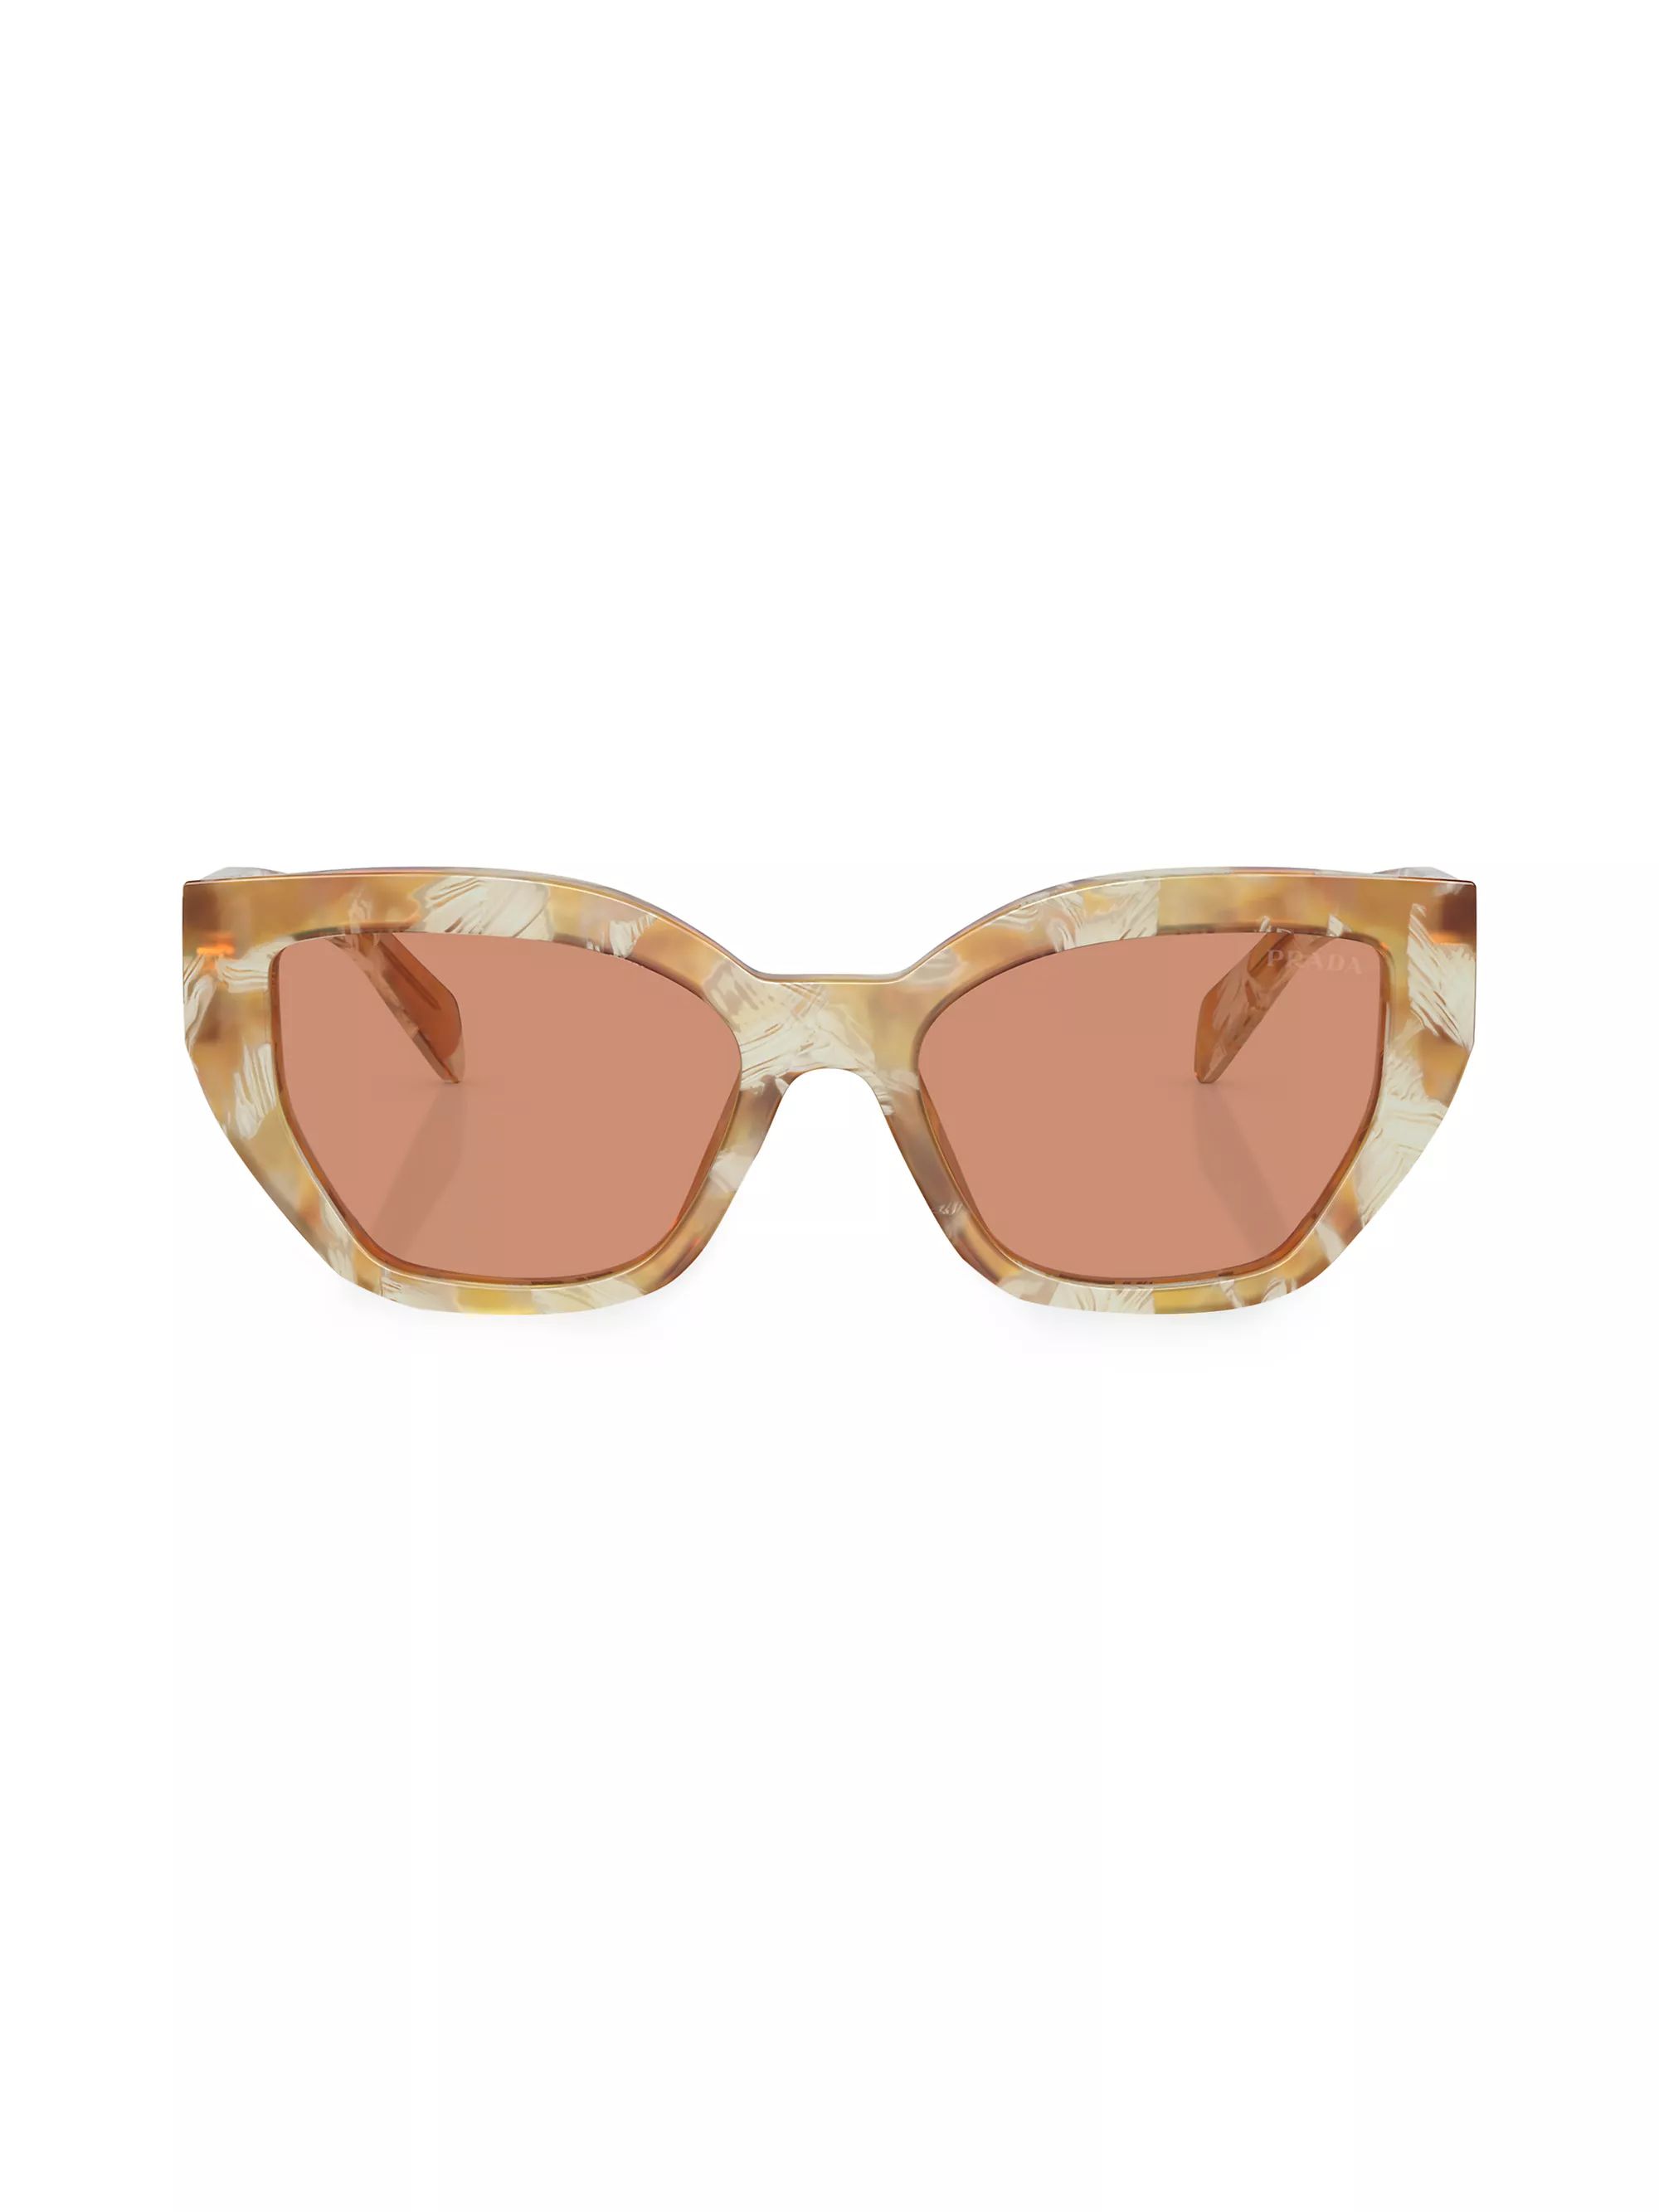 Shop Prada 53MM Cat-Eye Sunglasses | Saks Fifth Avenue | Saks Fifth Avenue